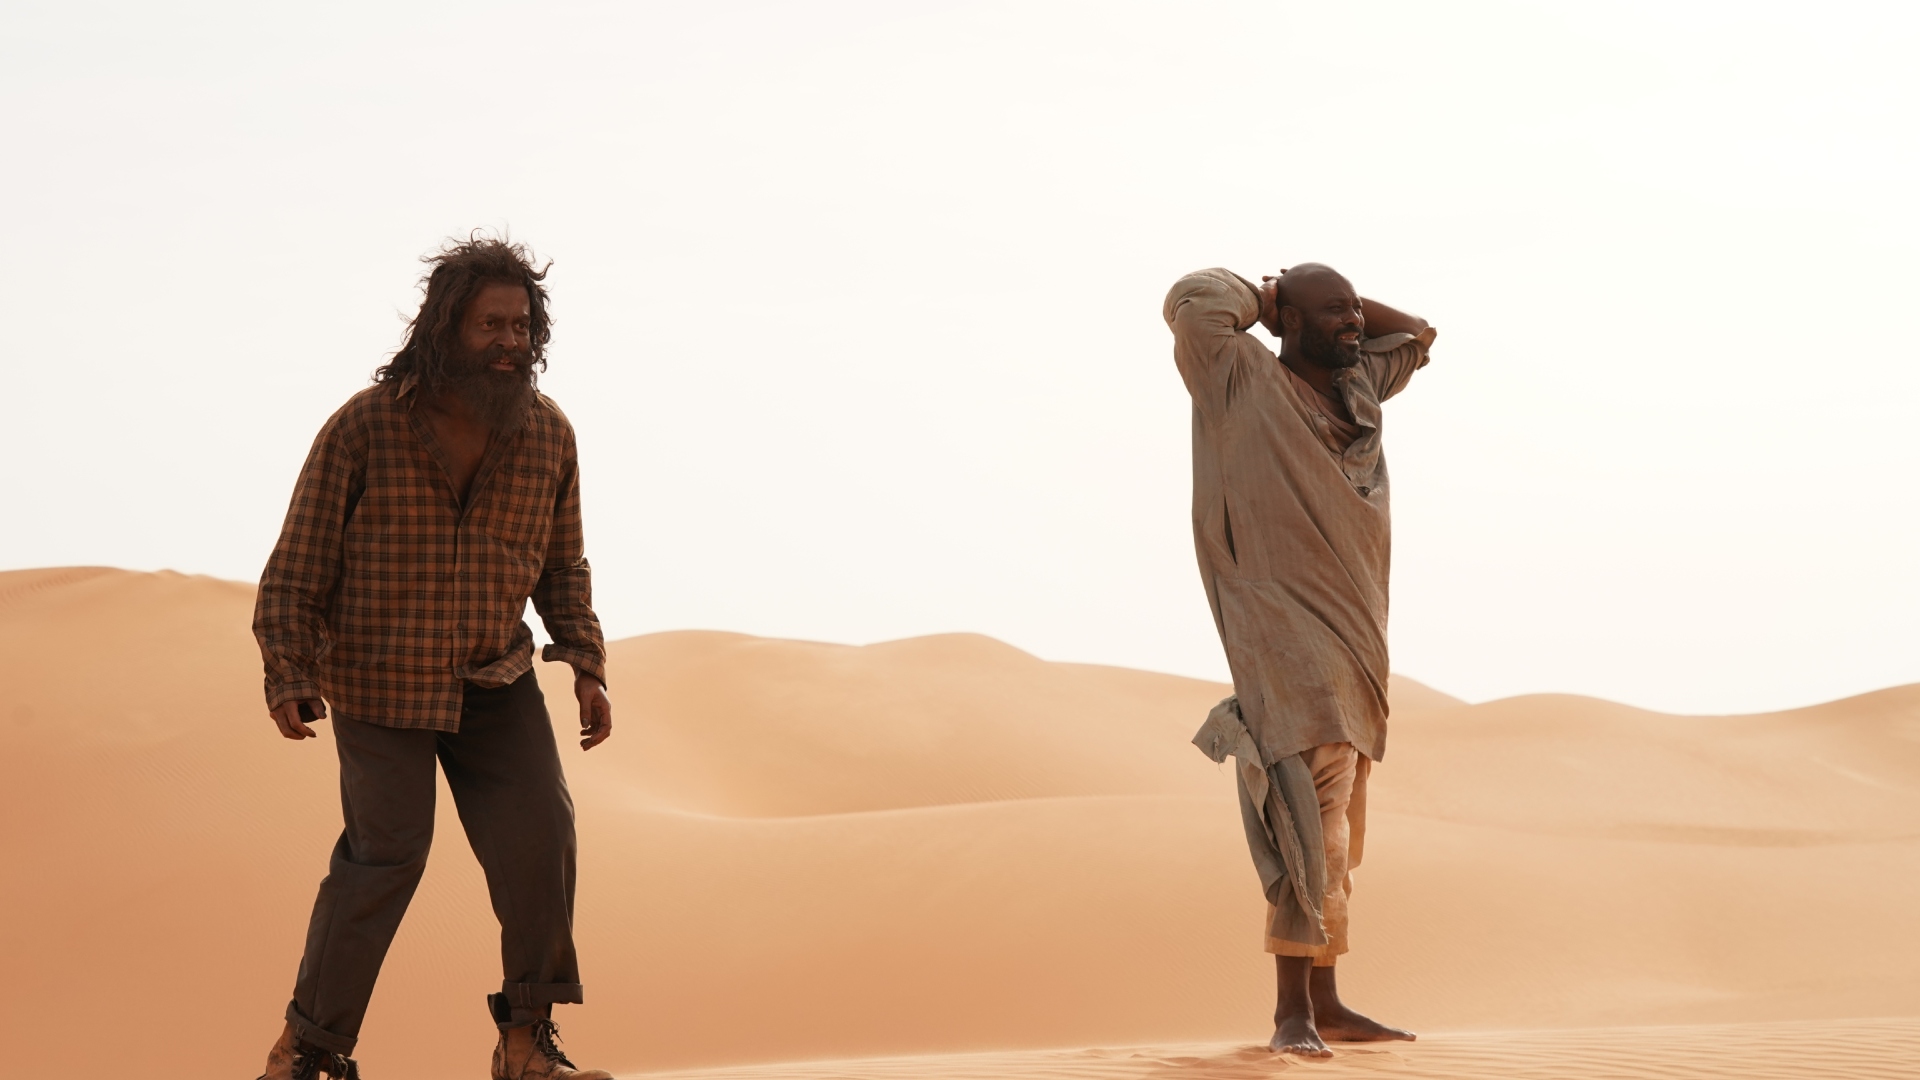 ‘Aadujeevitham’ X Review: Did Prithviraj Sukumaran Film Live Up to Expectations?